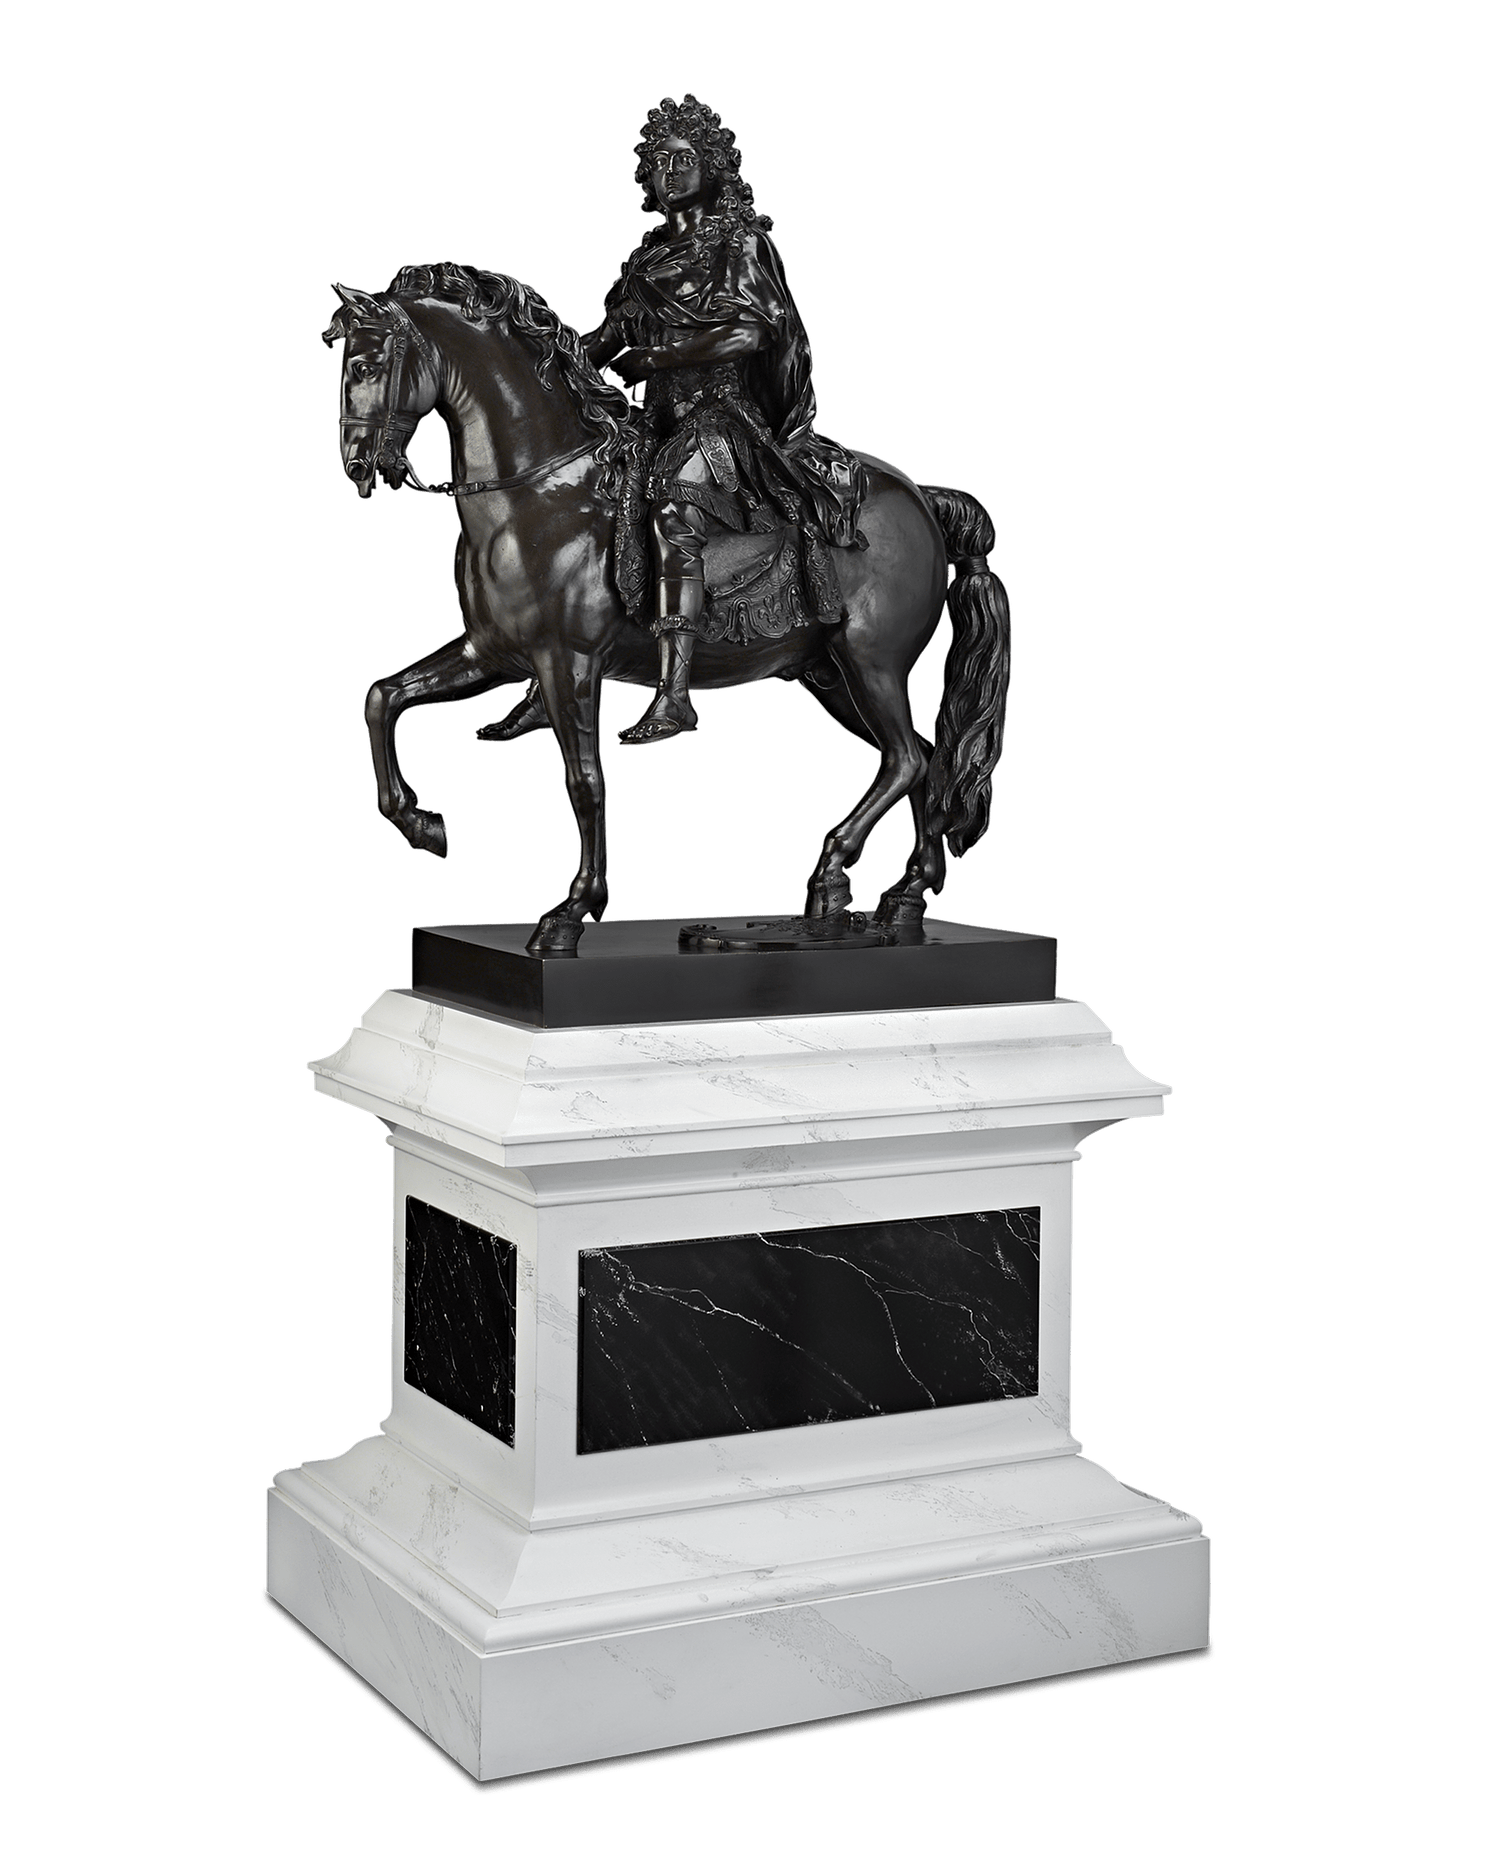 Girardon?s Equestrian Portrait of Louis XIV